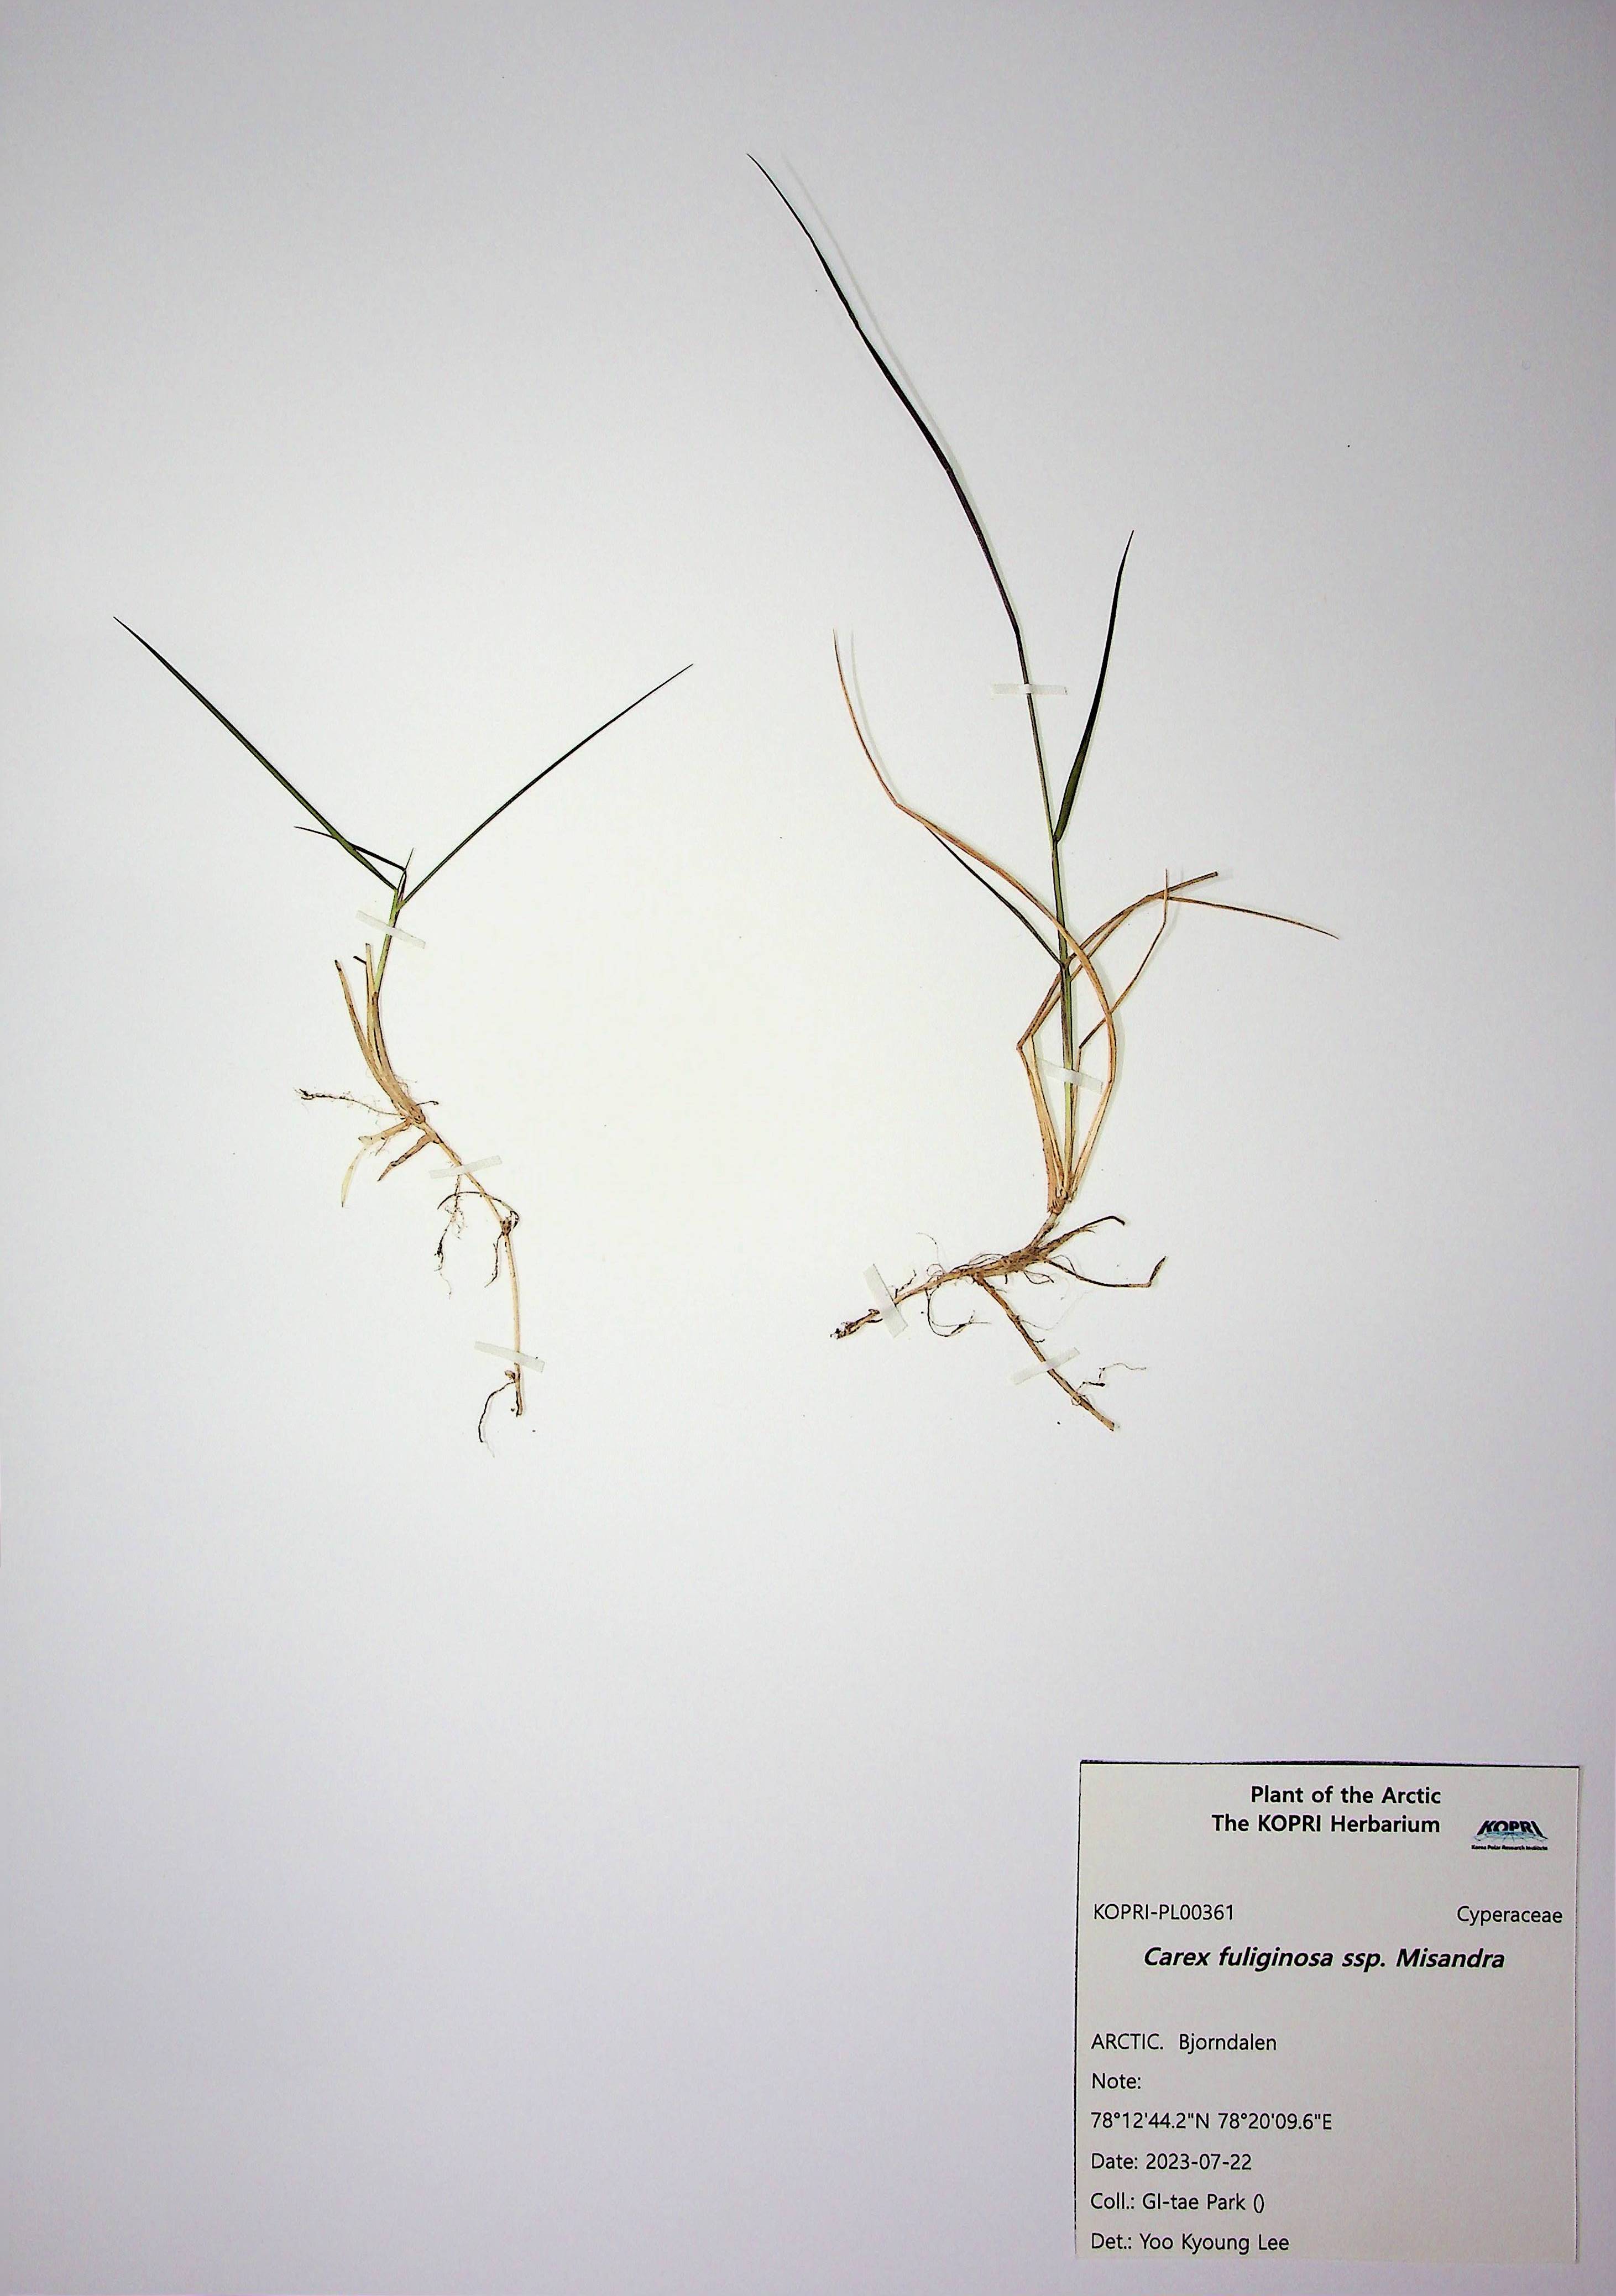 Carex fuliginosa ssp. Misandra